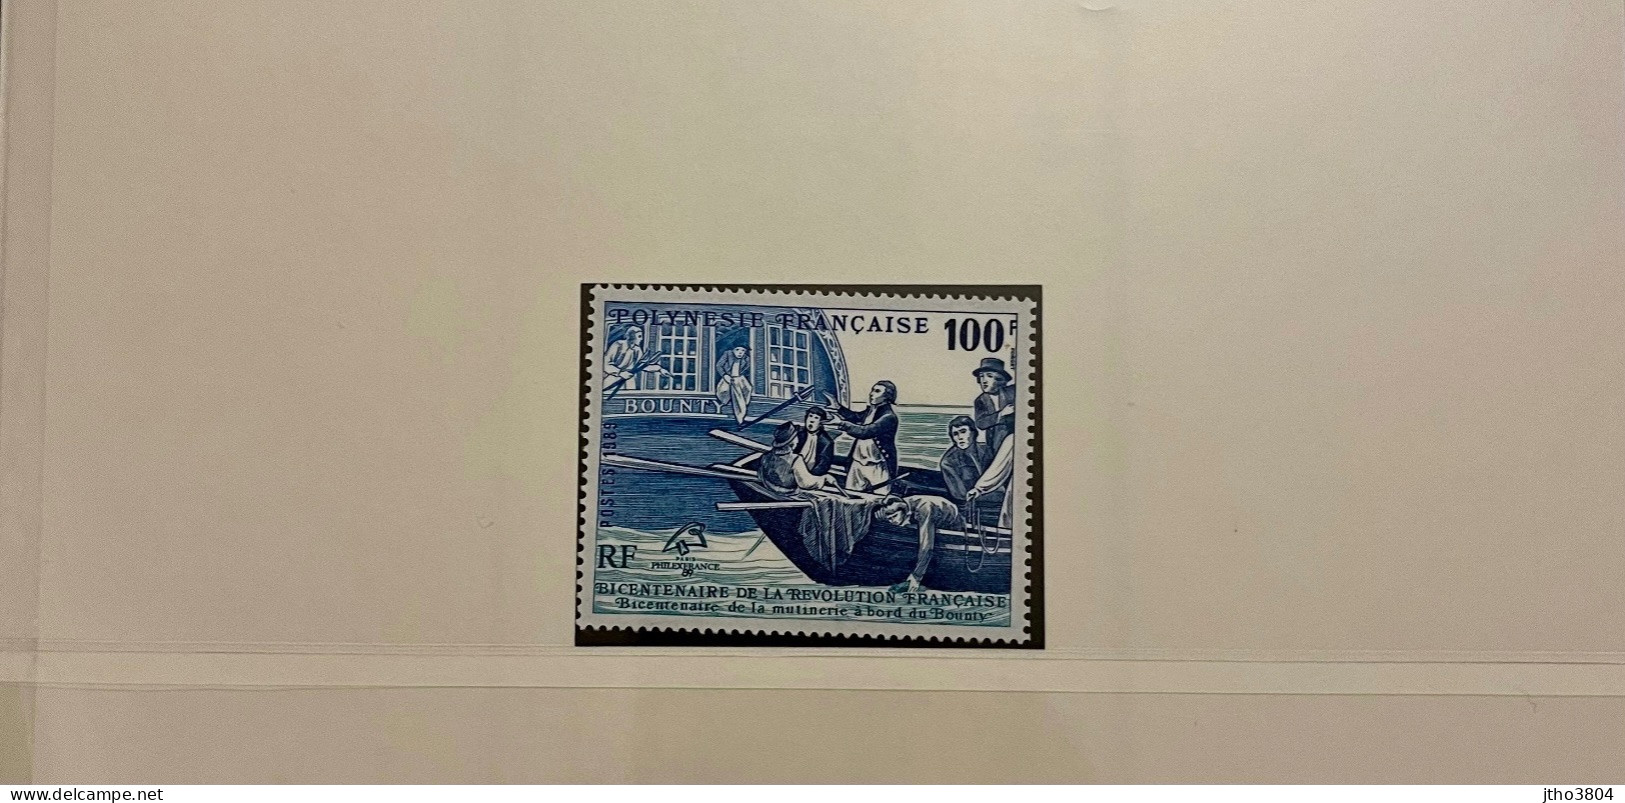 POLYNÉSIE FRANCAISE 1989 Philexfrance 1v Neuf MNH ** YT 336A Mi FRENCH POLYNESIA FRANZOSISCH POLYNESIEN - Unused Stamps